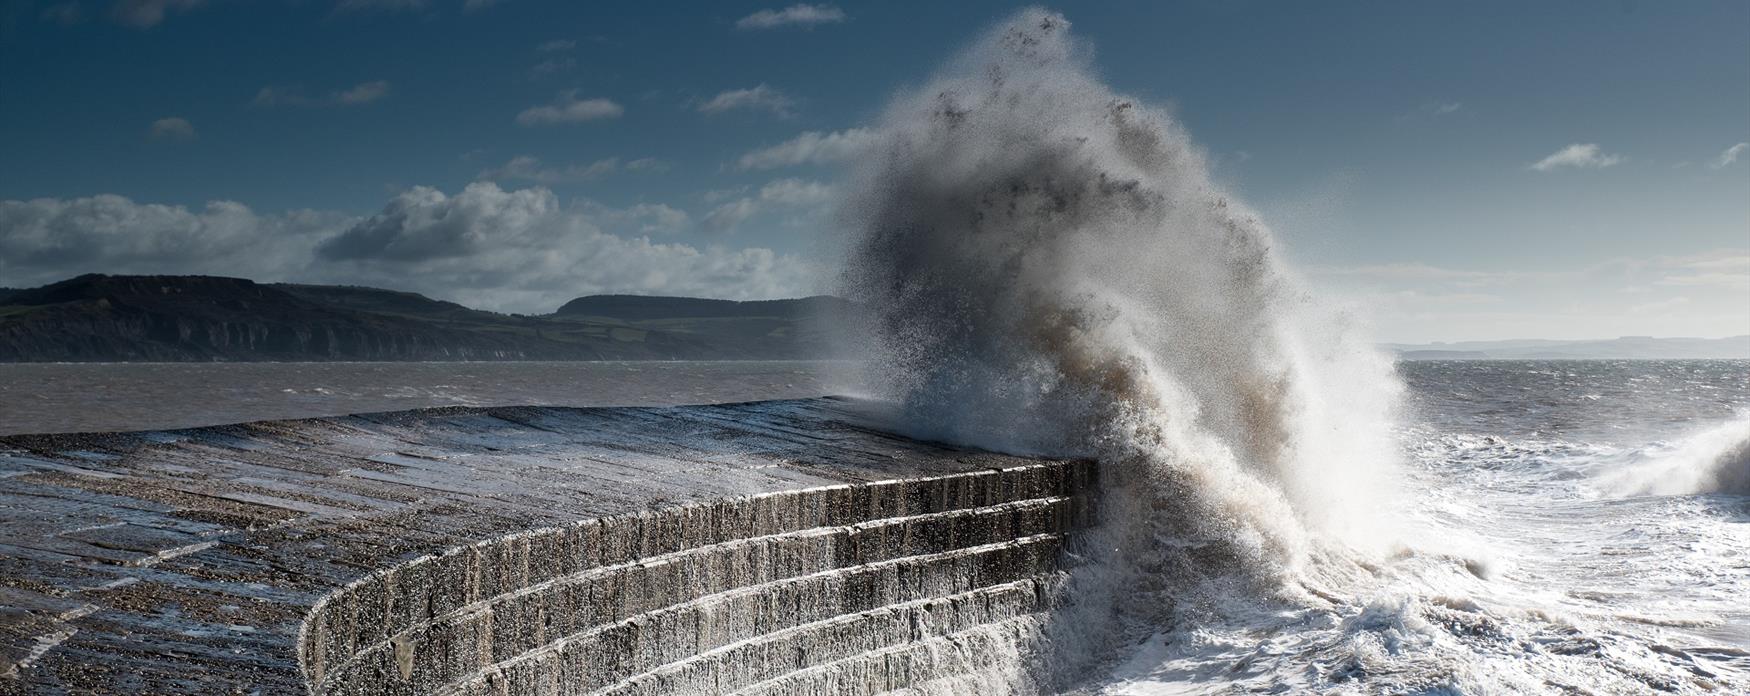 Stormy seas at The Cobb, Lyme Regis